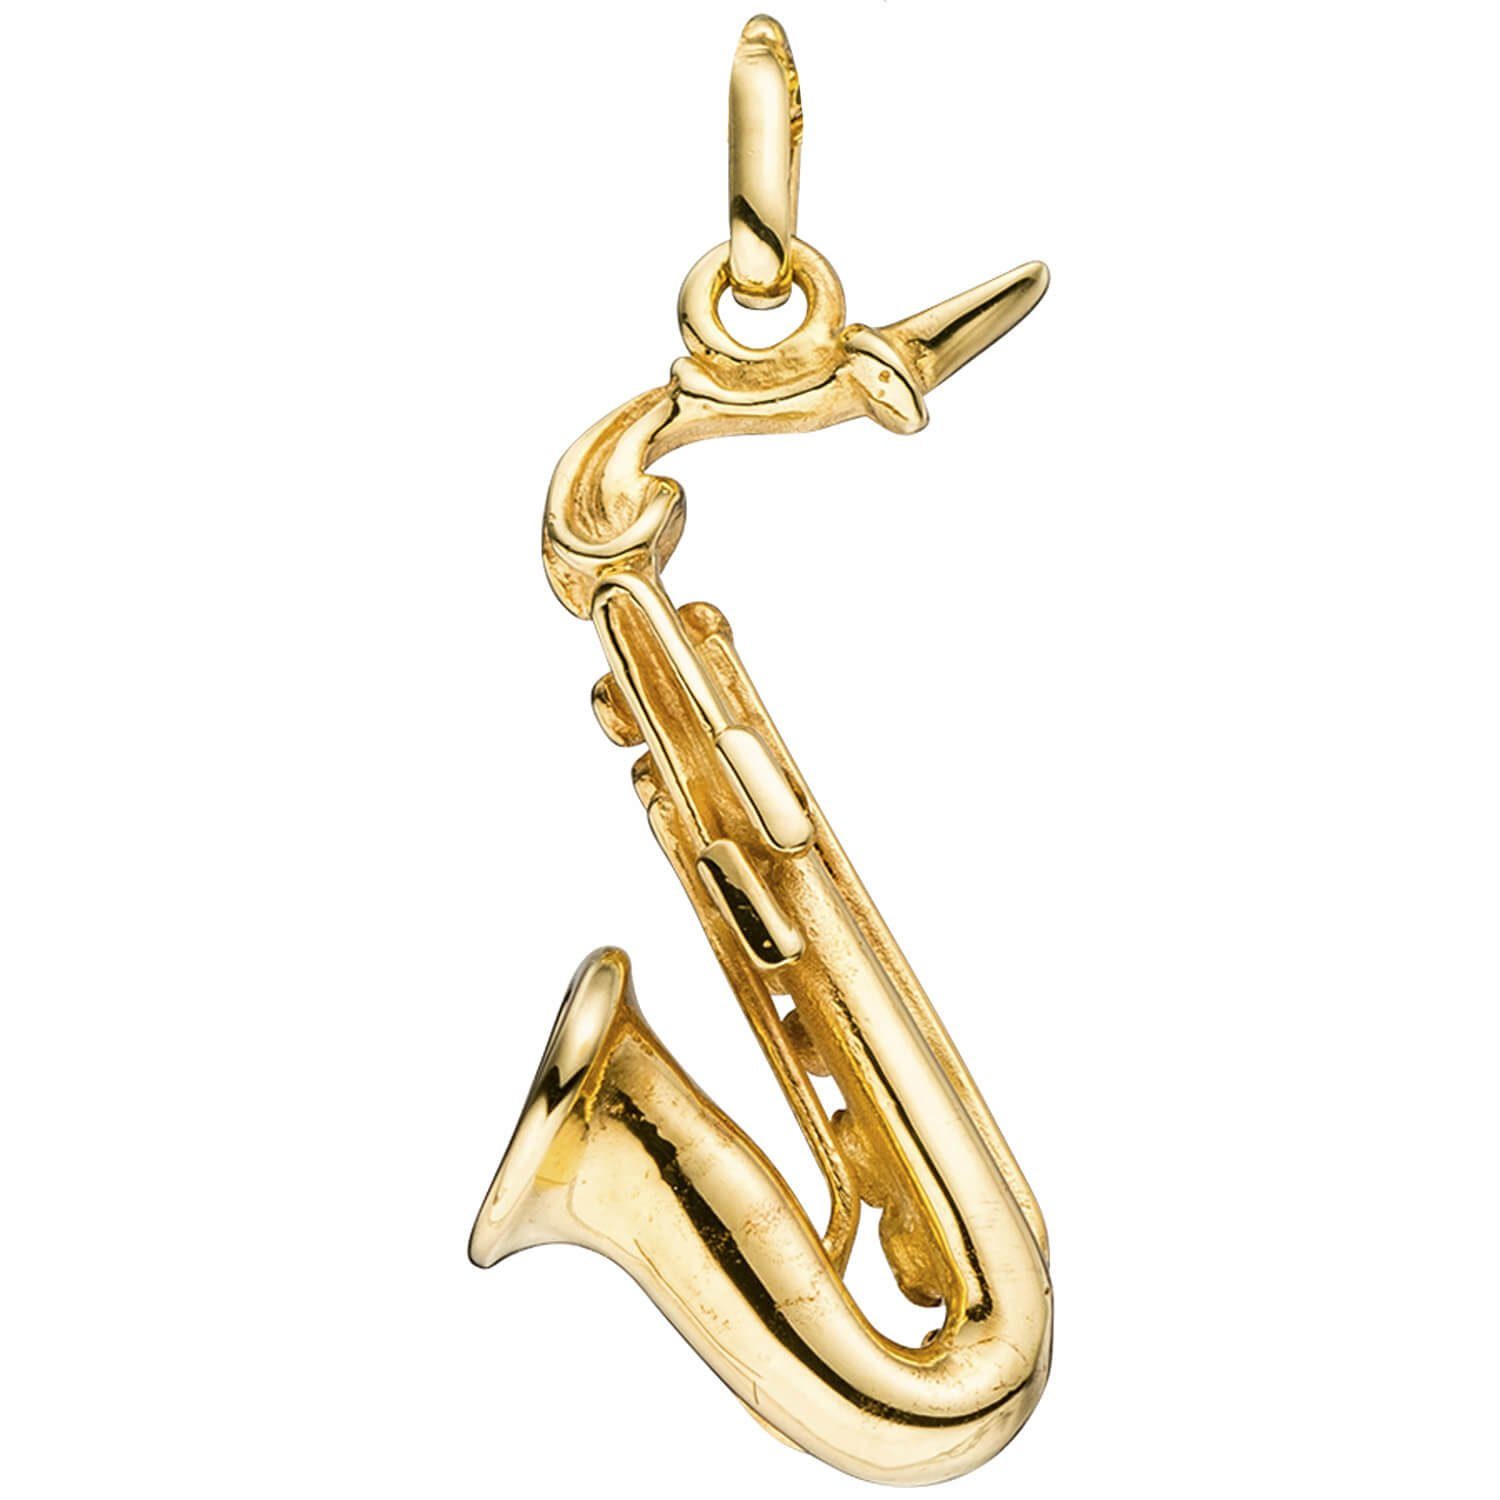 Schmuck Krone Kettenanhänger Anhänger Saxophon Saxofon aus 925 Silber  vergoldet 26x11,6mm Halsschmuck, Silber 925